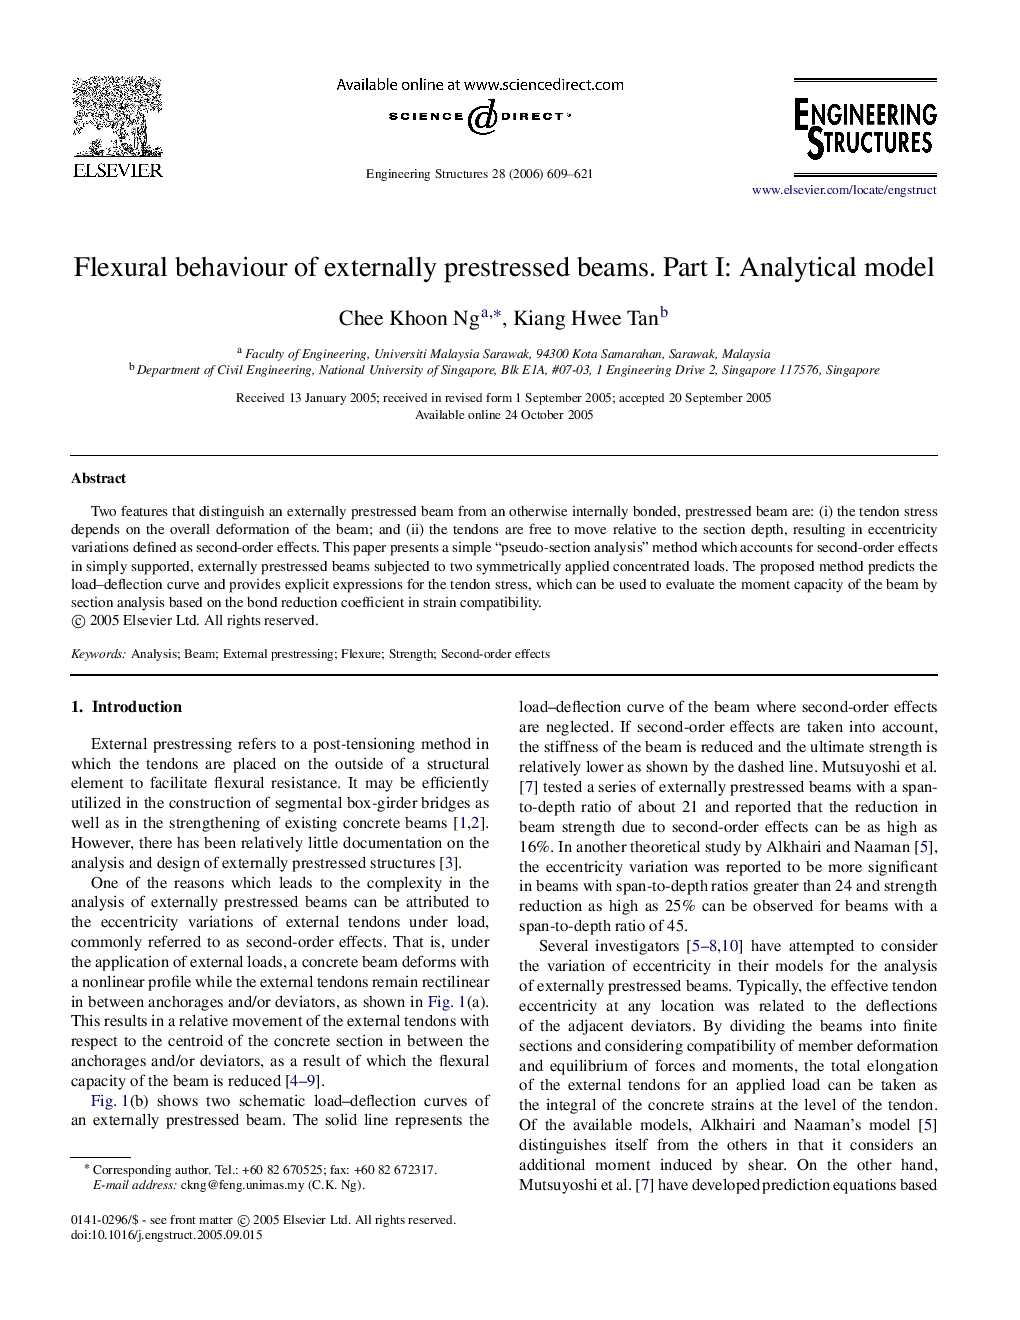 Flexural behaviour of externally prestressed beams. Part I: Analytical model